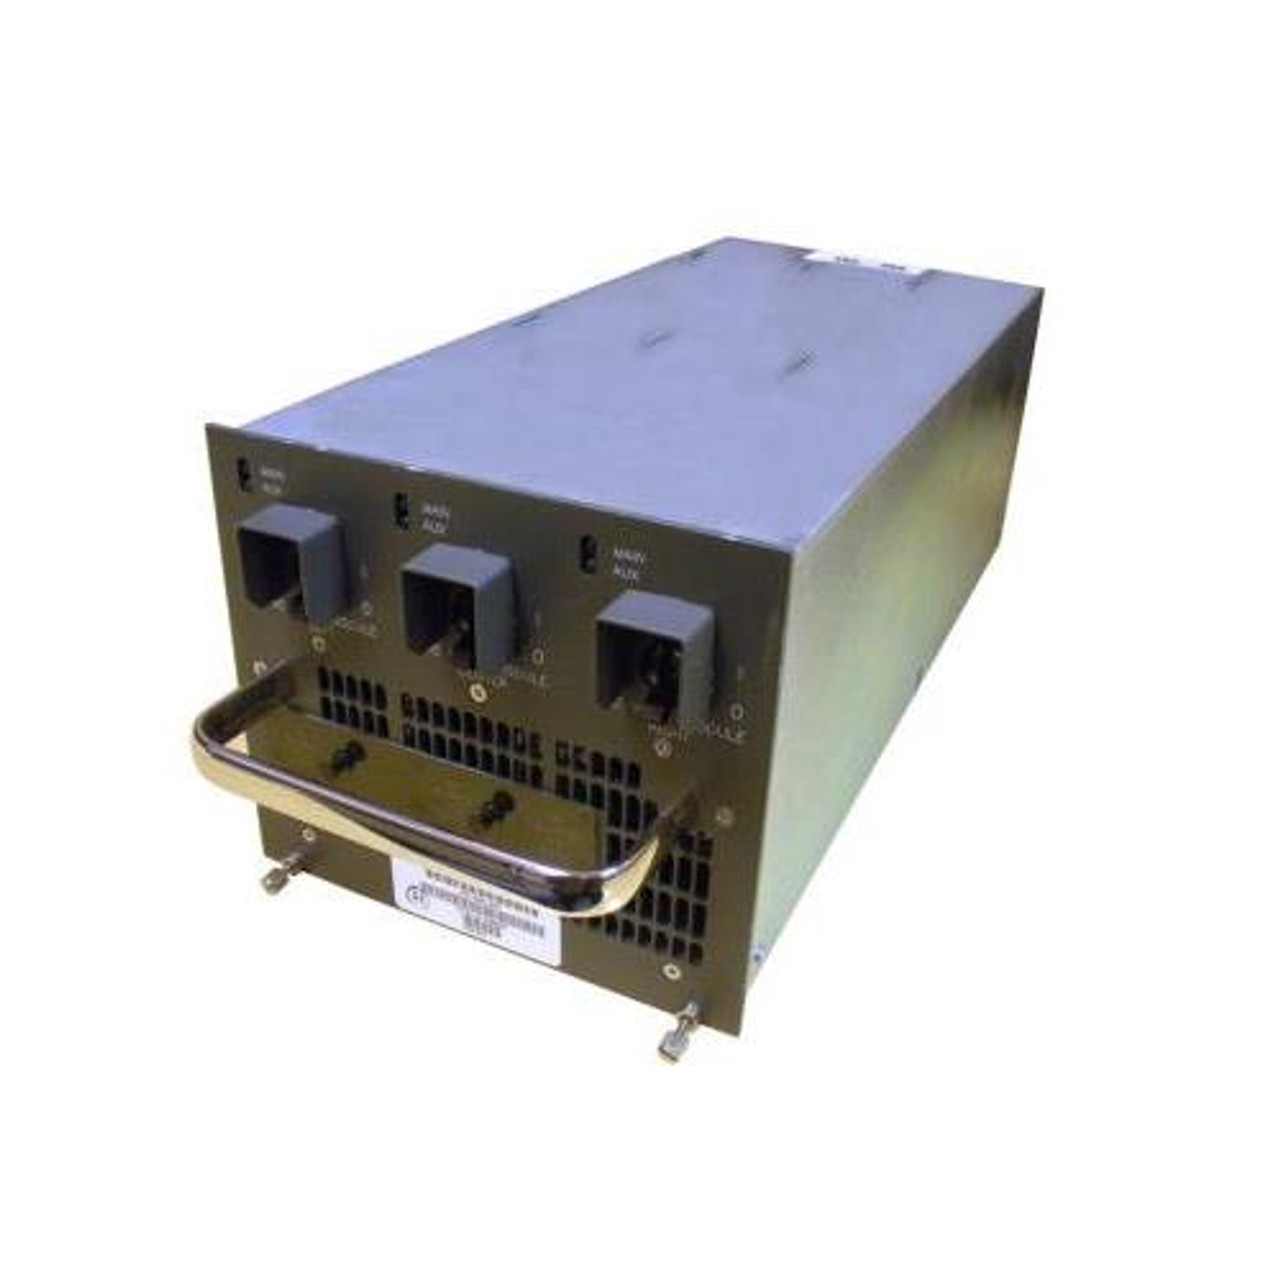 075-000-008 EMC Symmetrix AC Power Supply Input